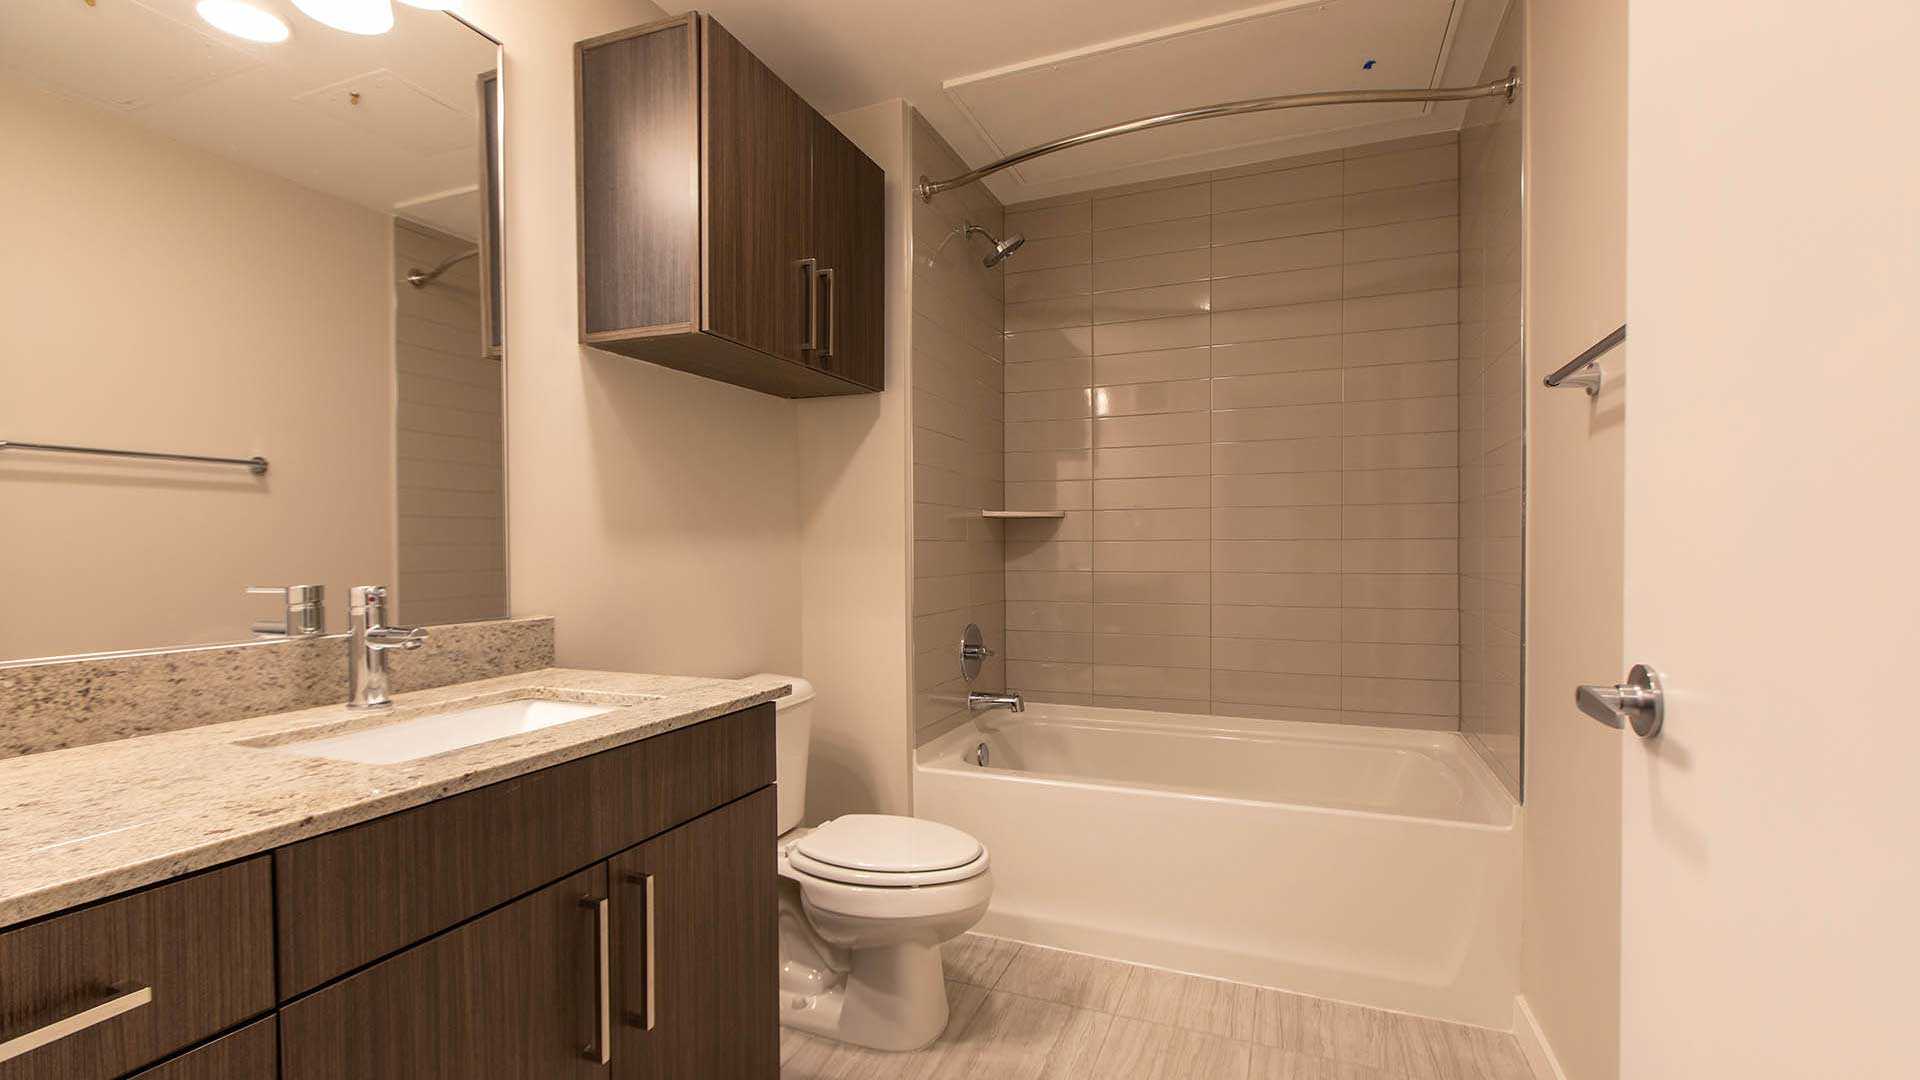 Reve apartments a1 bathroom warm decor view